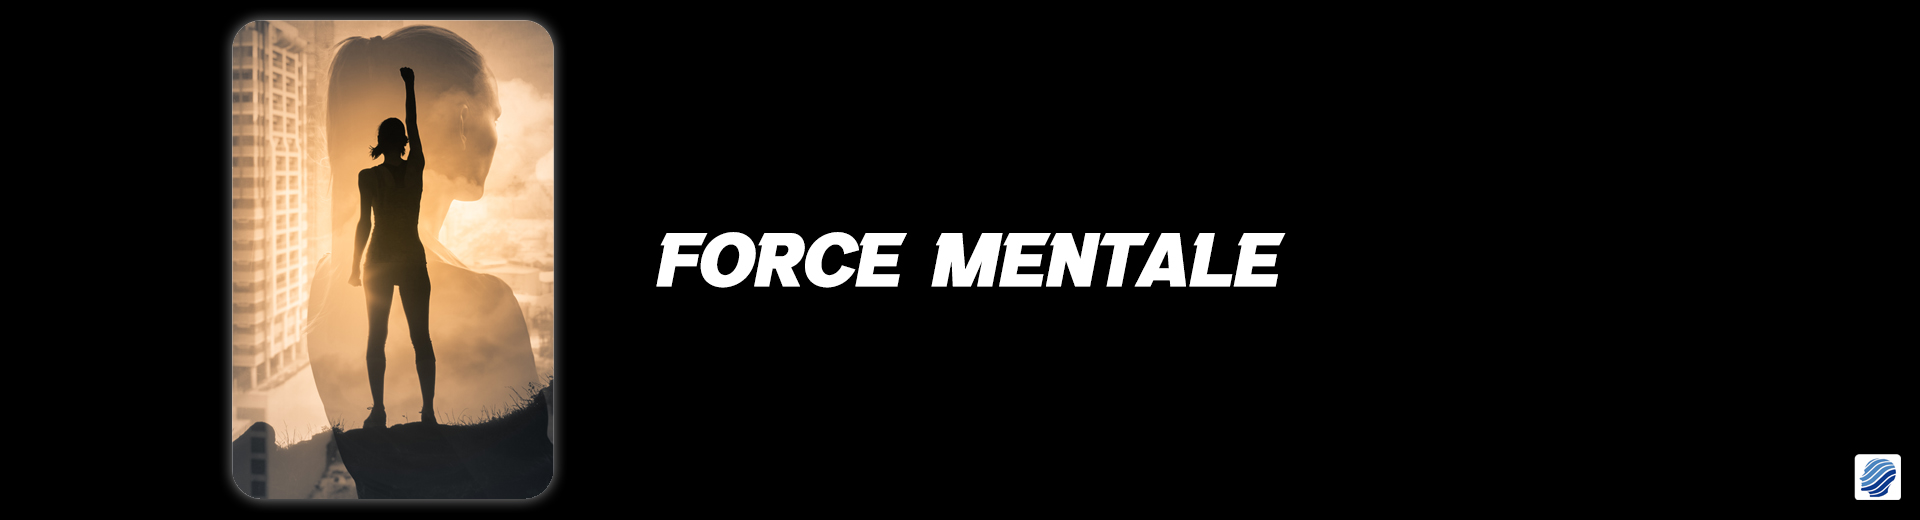 Force mentale